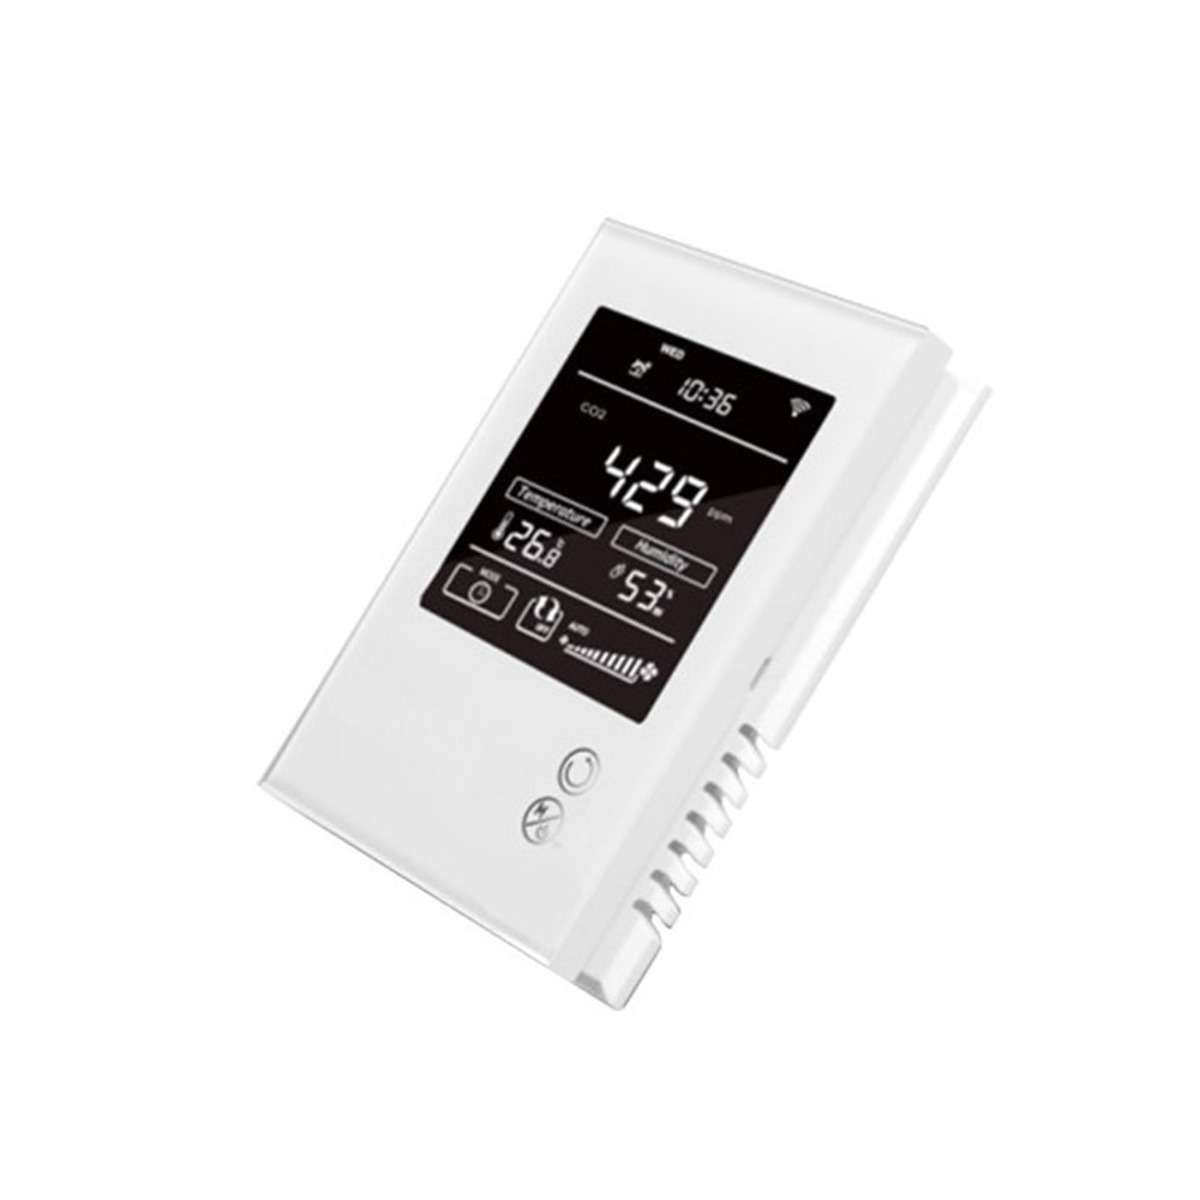 MCO HOME CO2-, Temperatur- MCOEMH9-CO2-230 Sensor 230VAC Feuchtigkeitssensor - - HOME und MCO Weiß